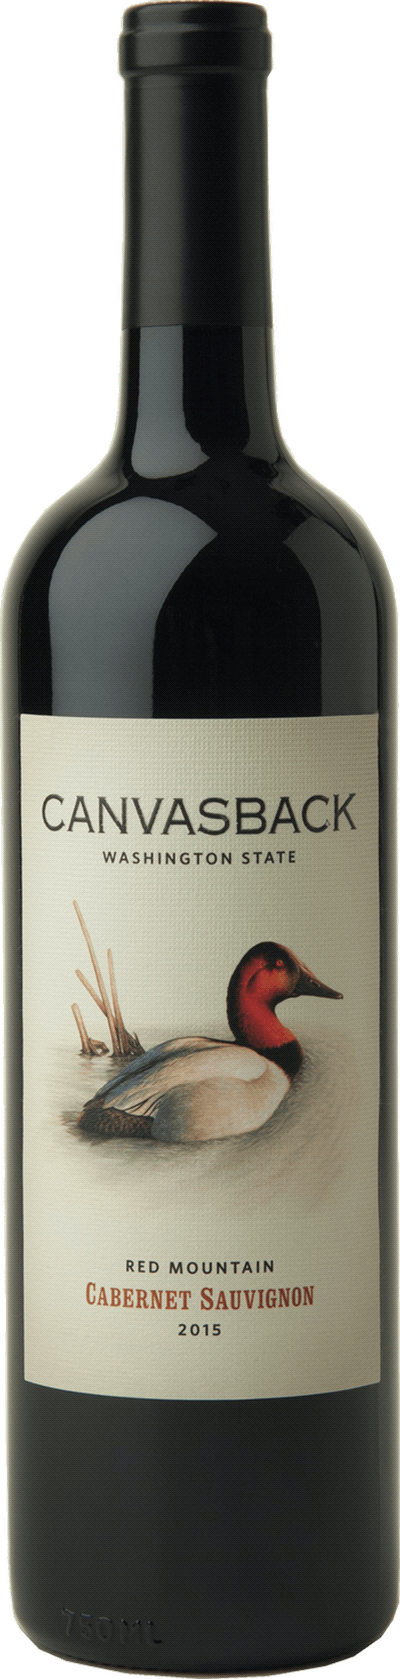 Canvasback Washington State Red Mountain Cabernet Sauvignon